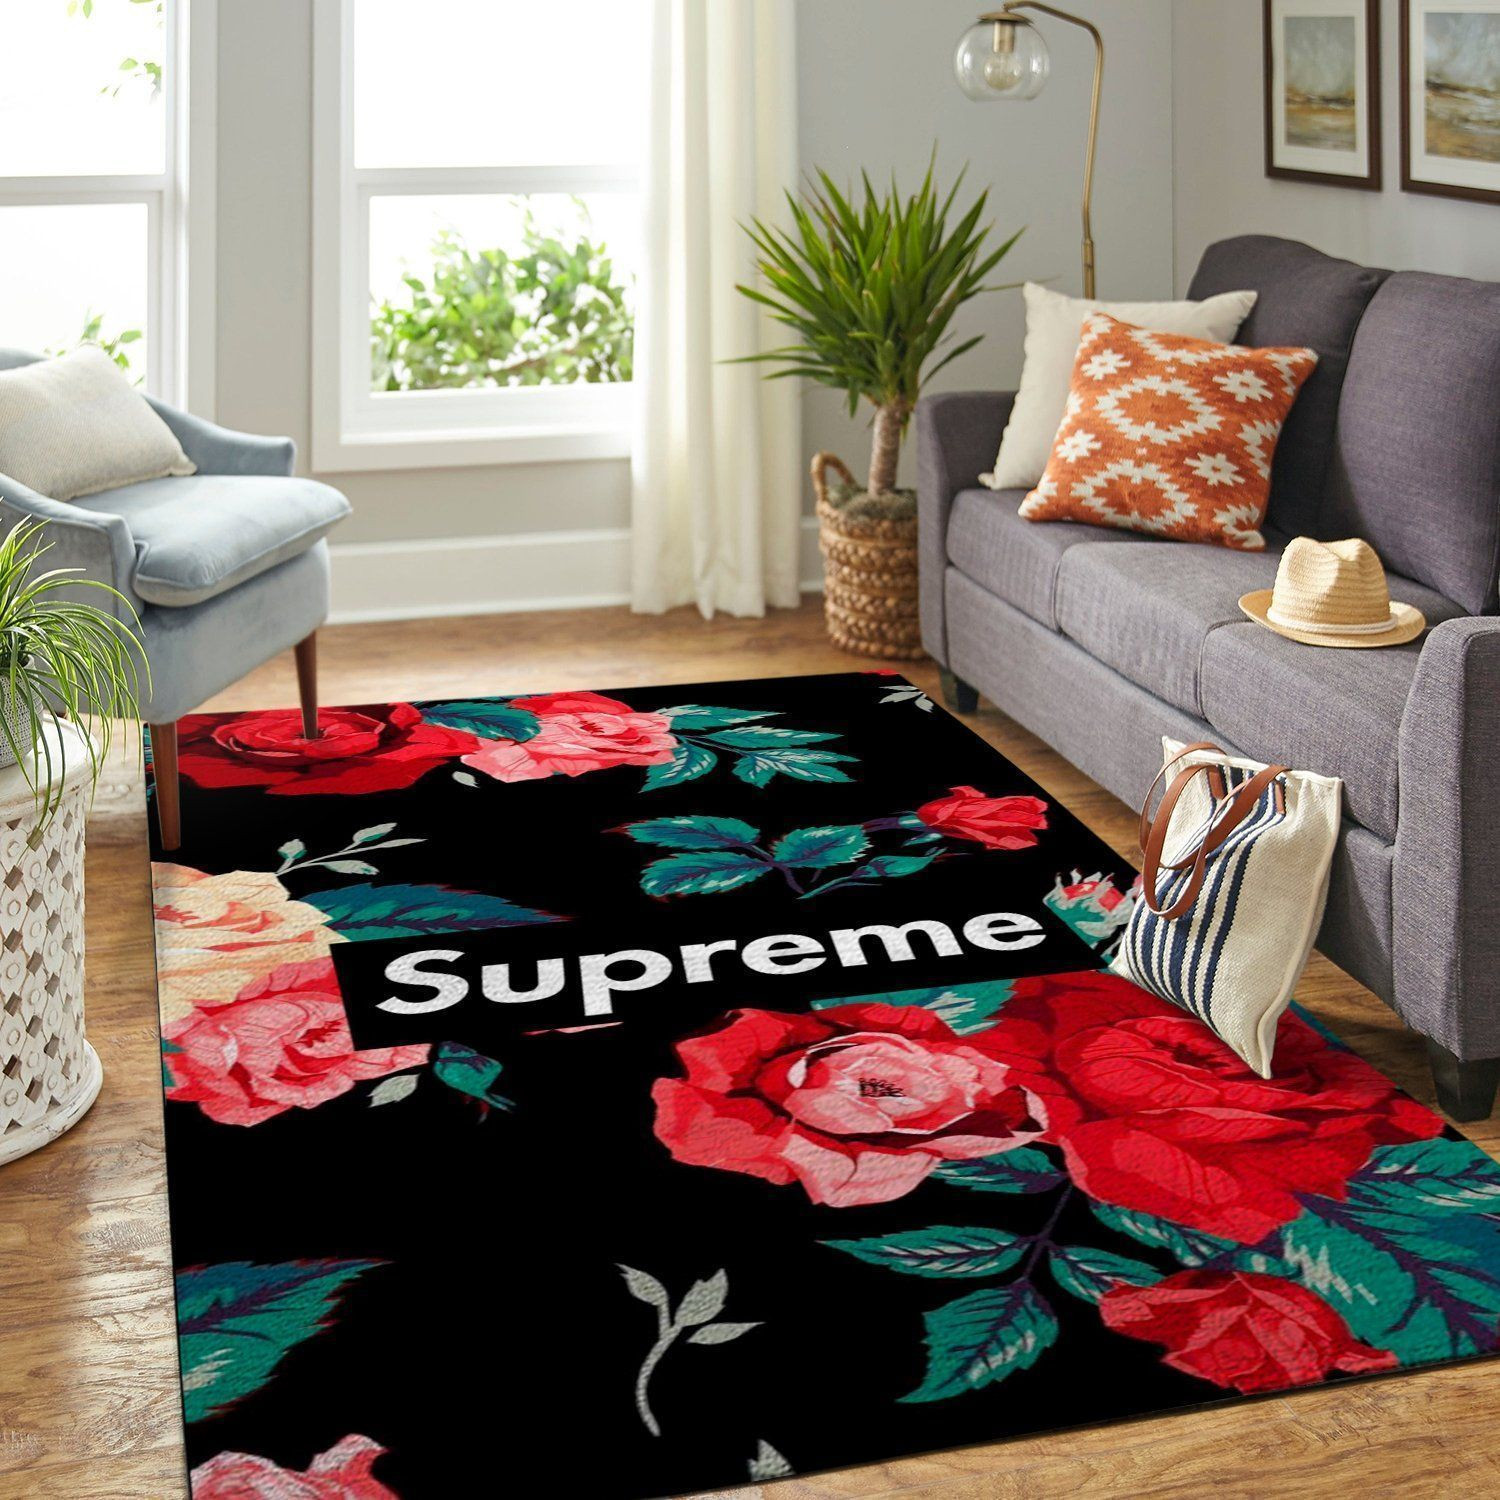 Supreme Area Luxury Fashion Brand Rug Area Carpet Door Mat Home Decor